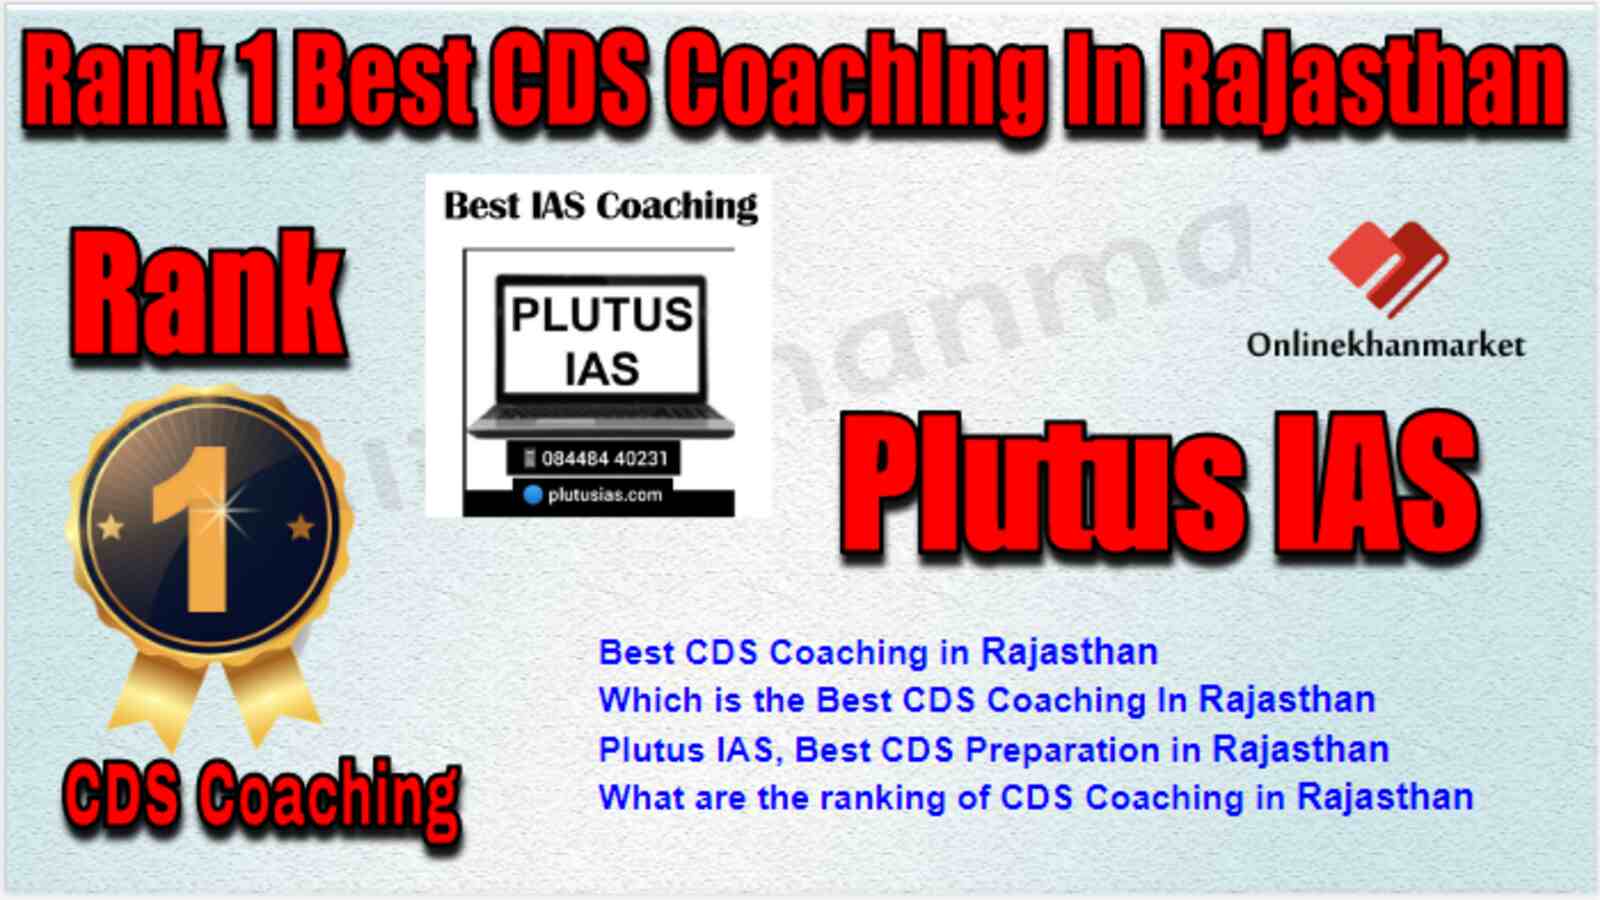 Rank 1 Best CDS Coaching in Rajasthan